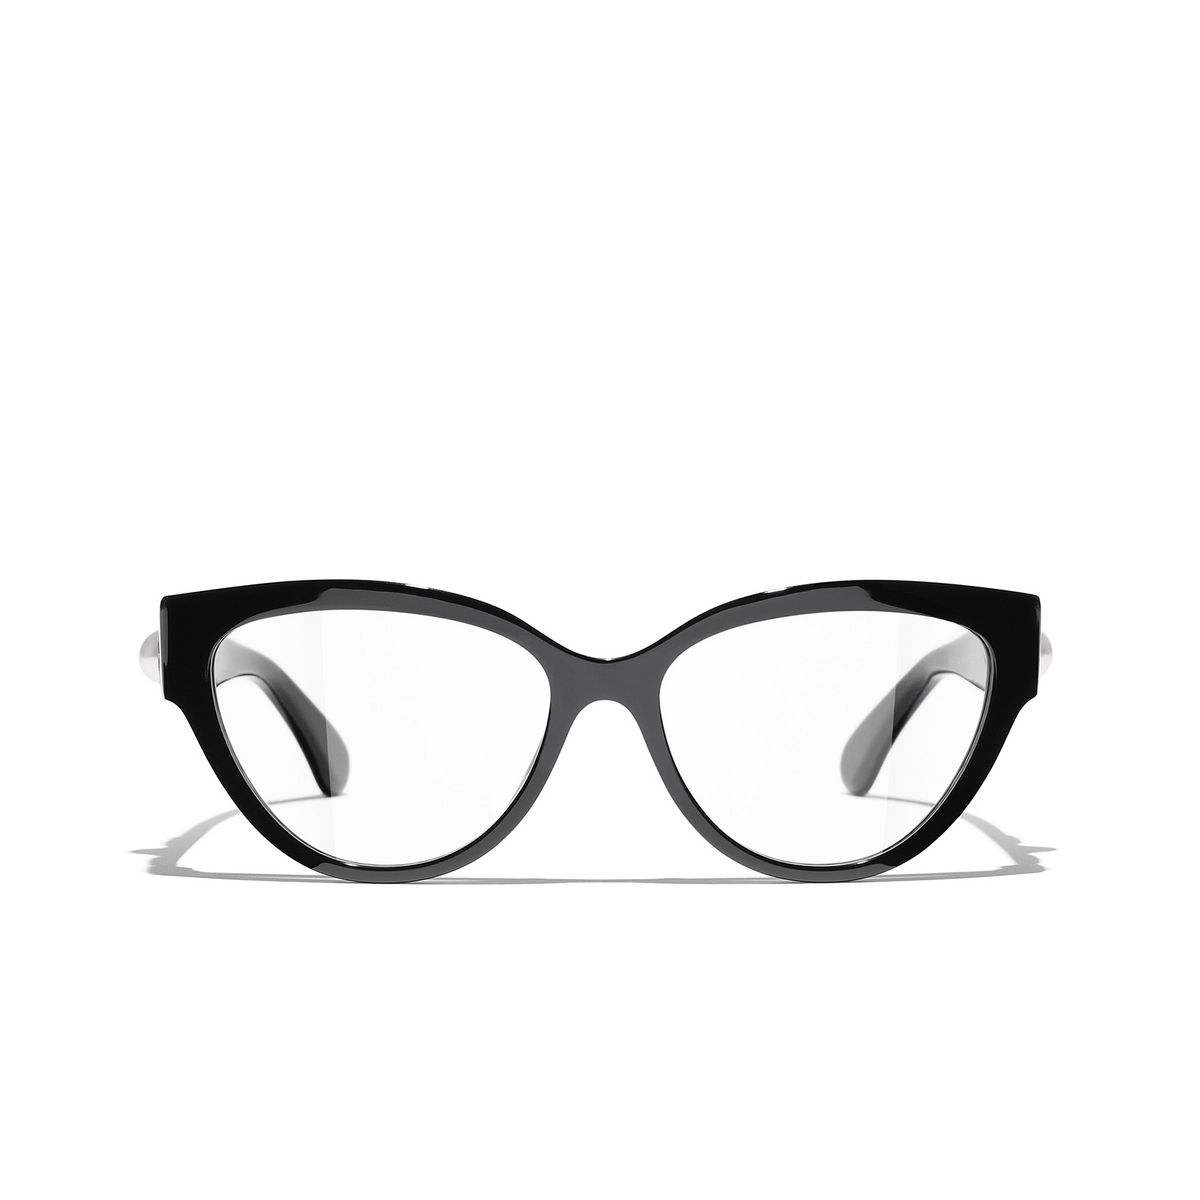 CHANEL cateye Eyeglasses C622 Black - front view